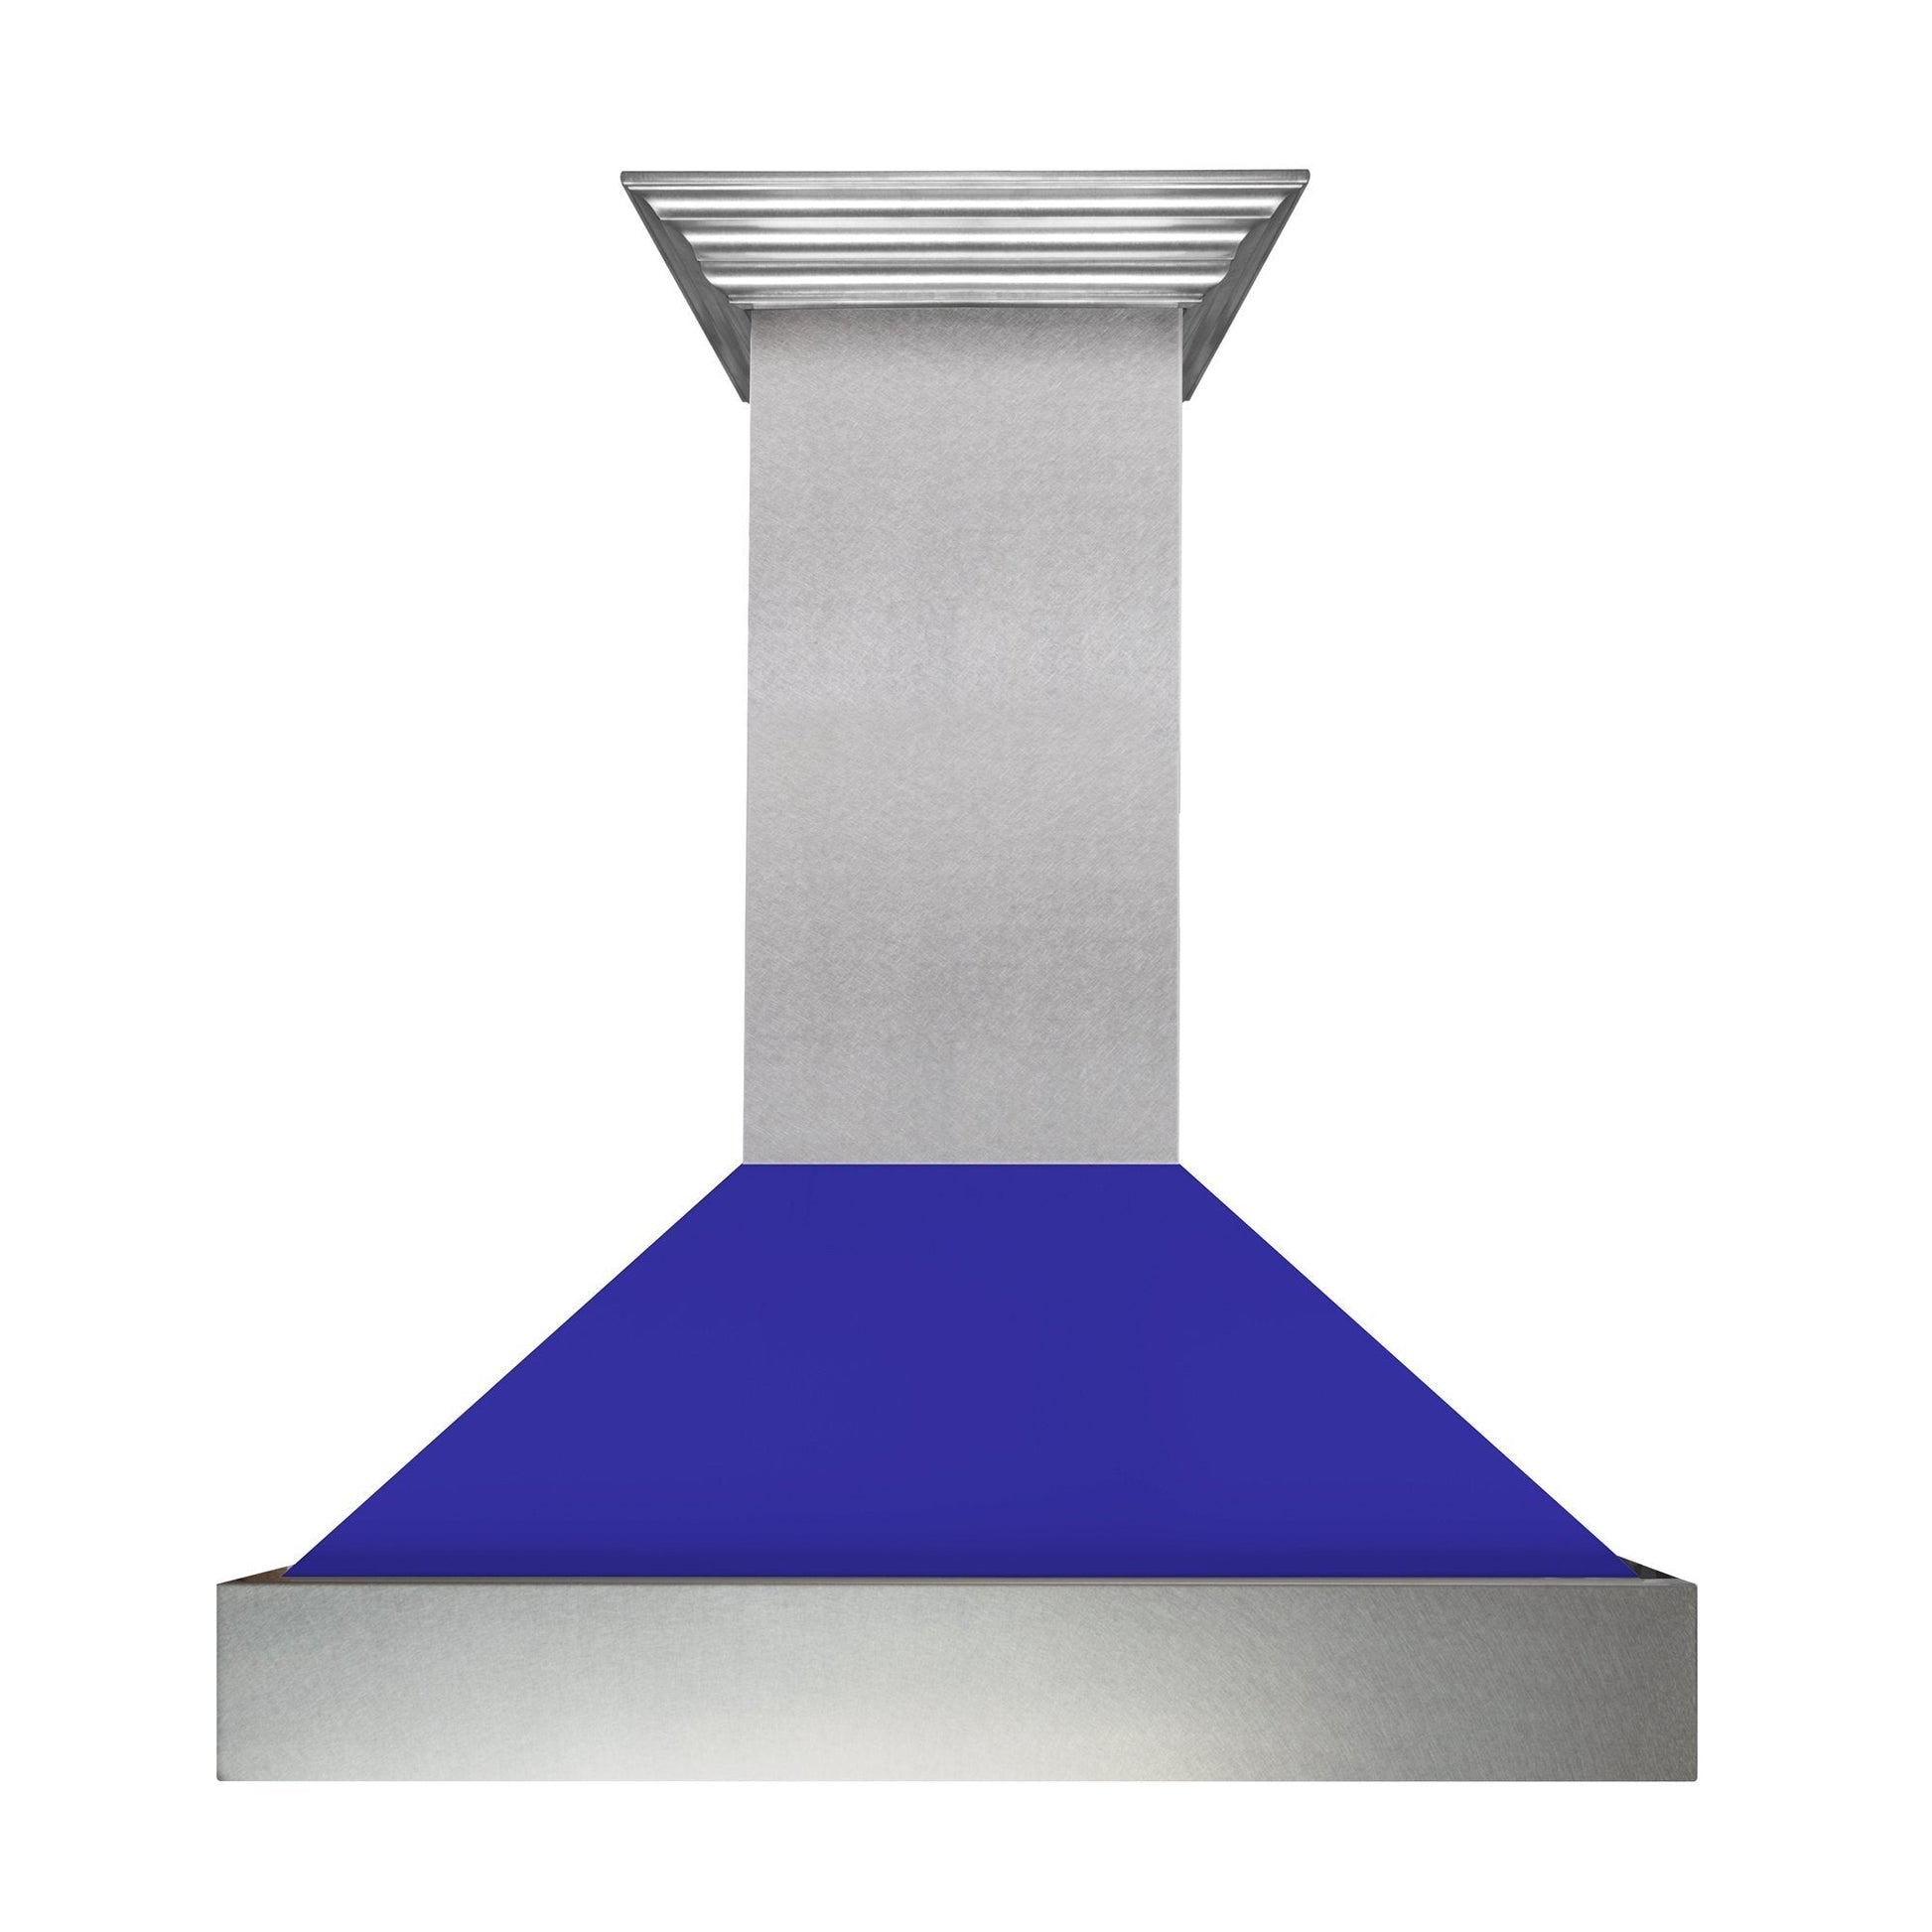 ZLINE Ducted Range Hood - DuraSnow Steel with Matte Blue Shell